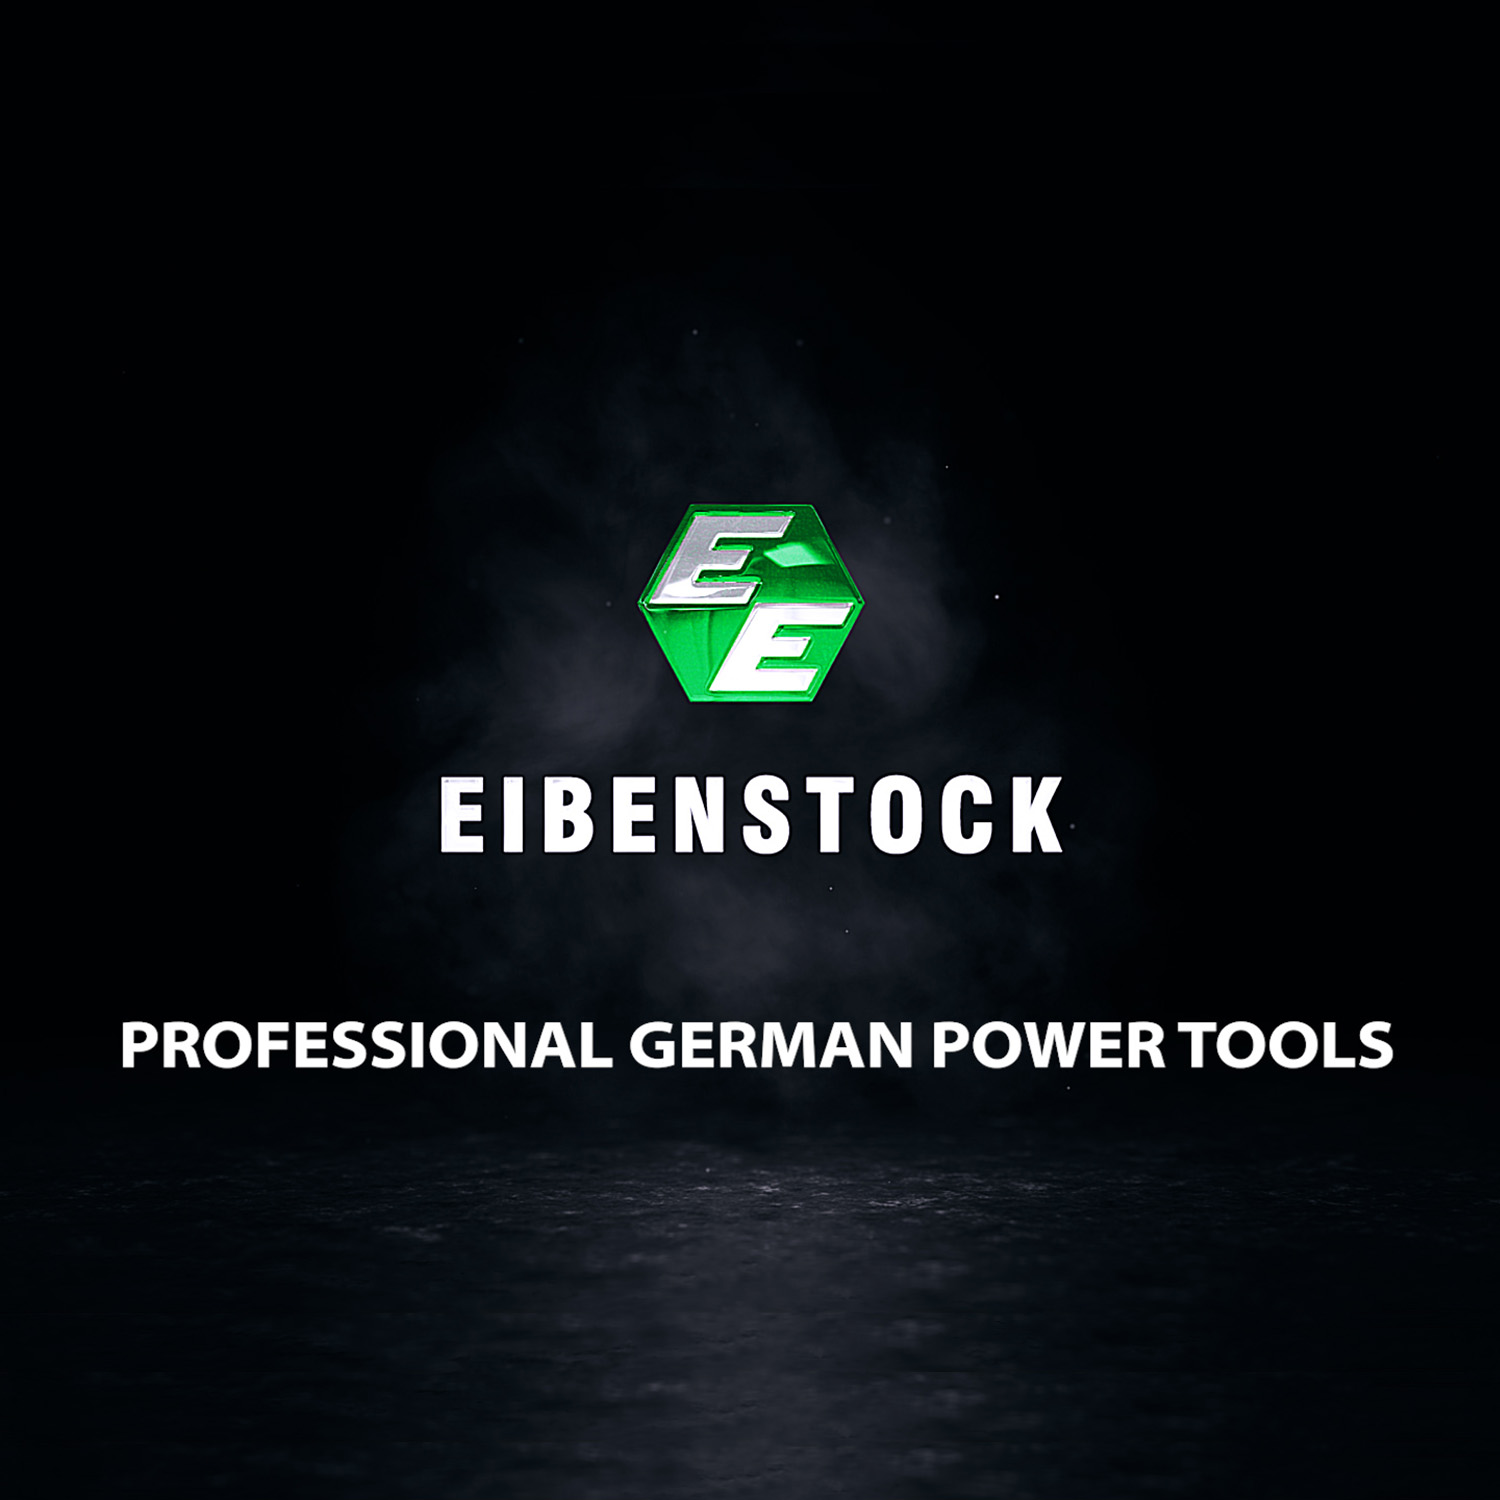 Logo Elektrowerkzeuge Eibenstock Professional German Power Tools